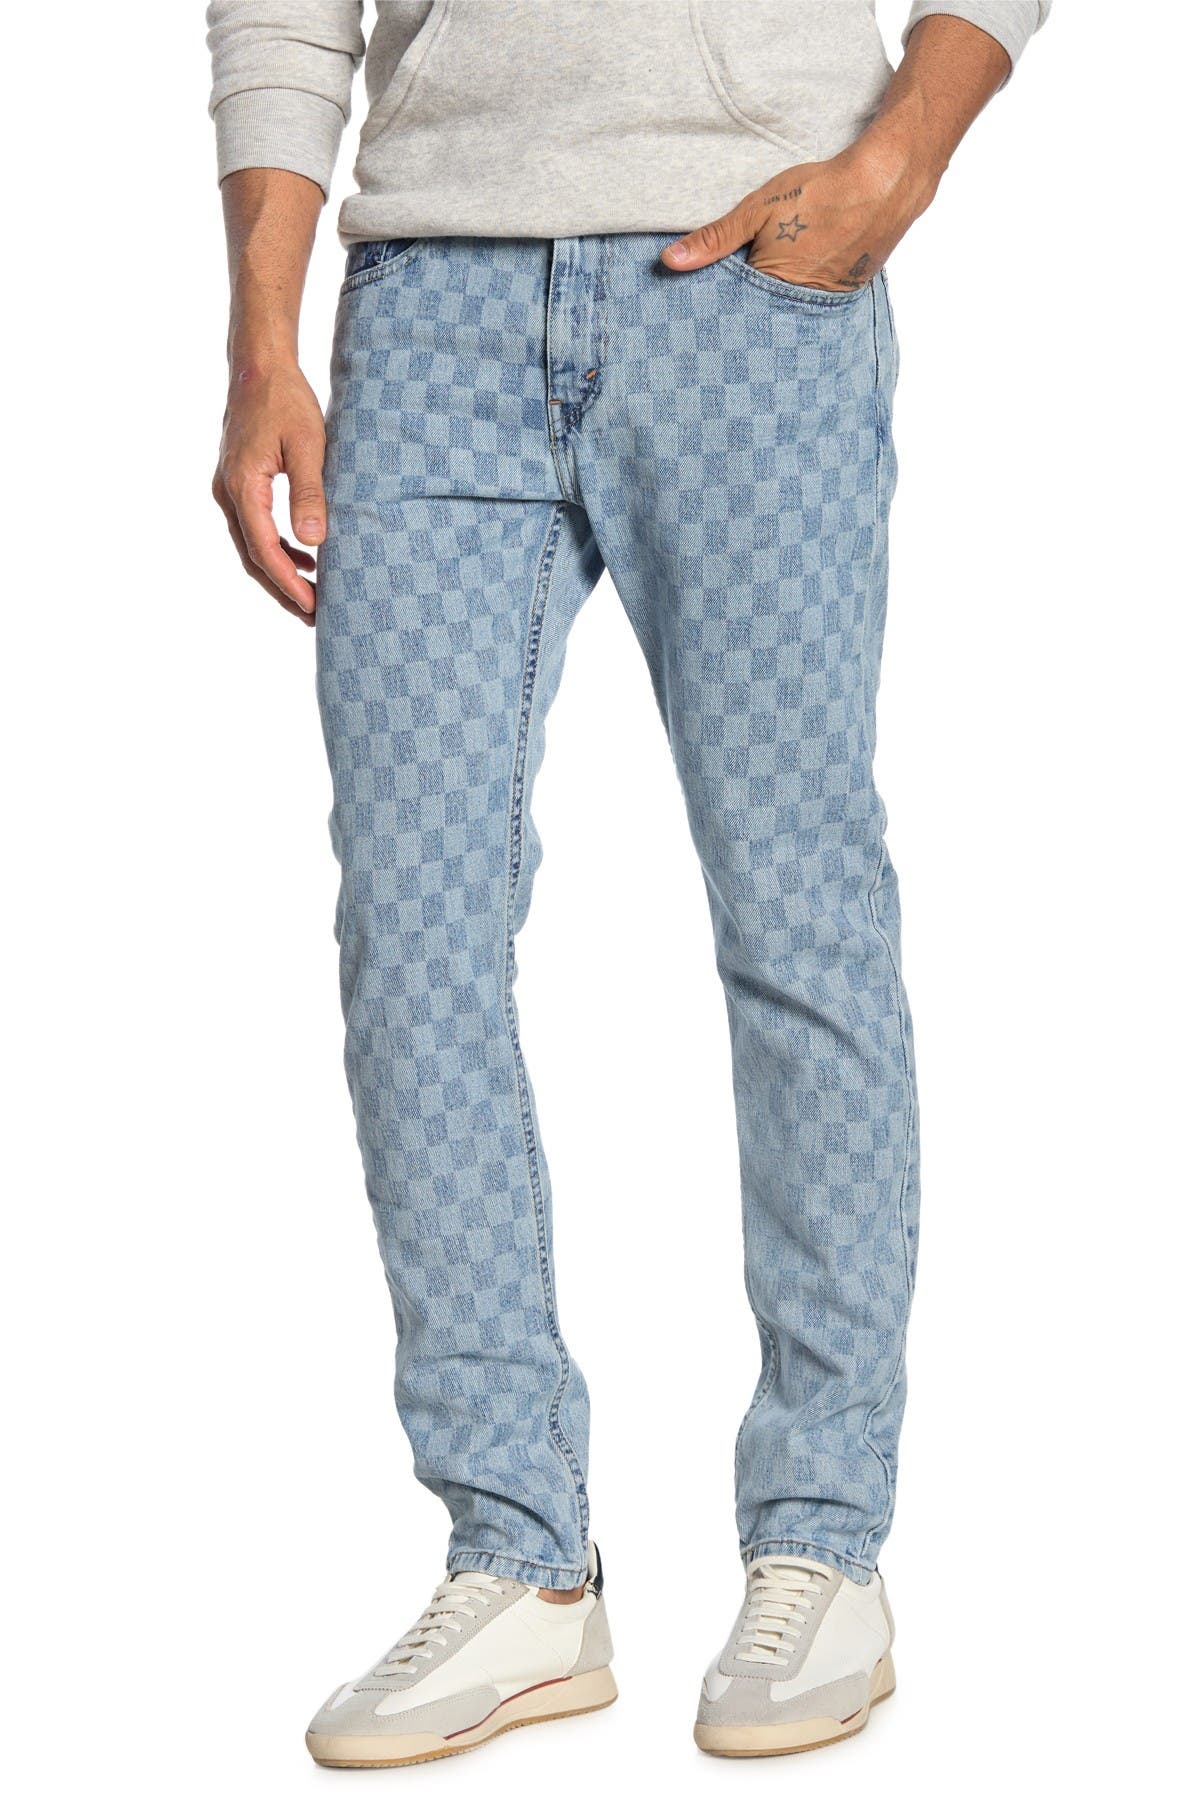 checkered denim jeans